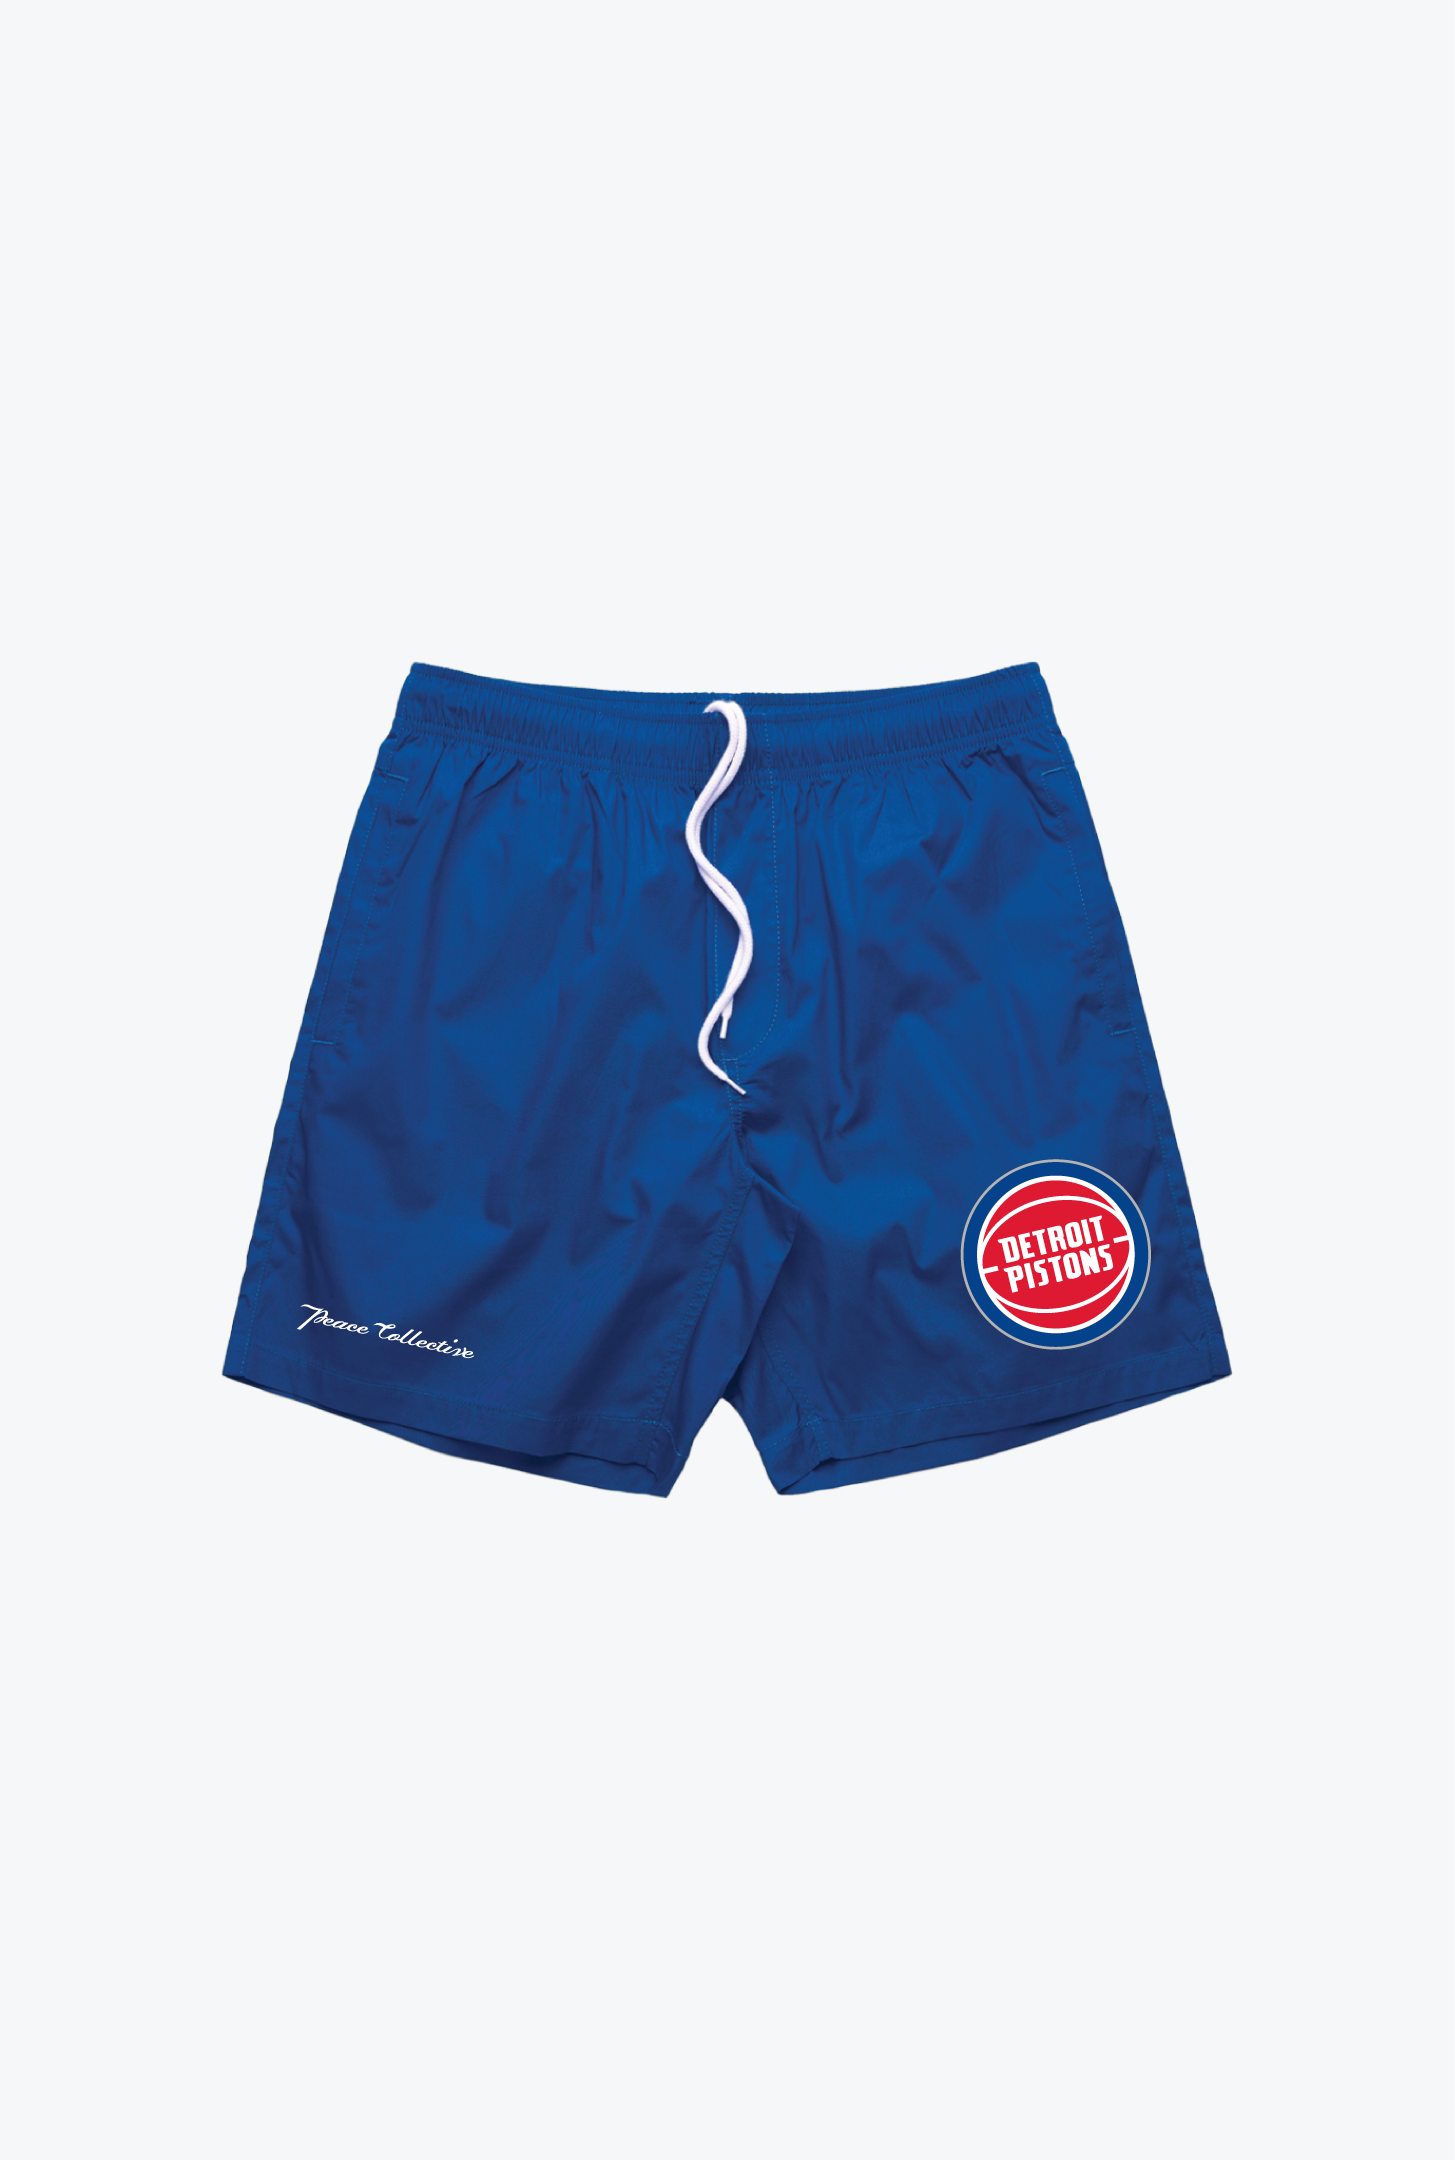 Detroit Pistons Board Shorts - Blue